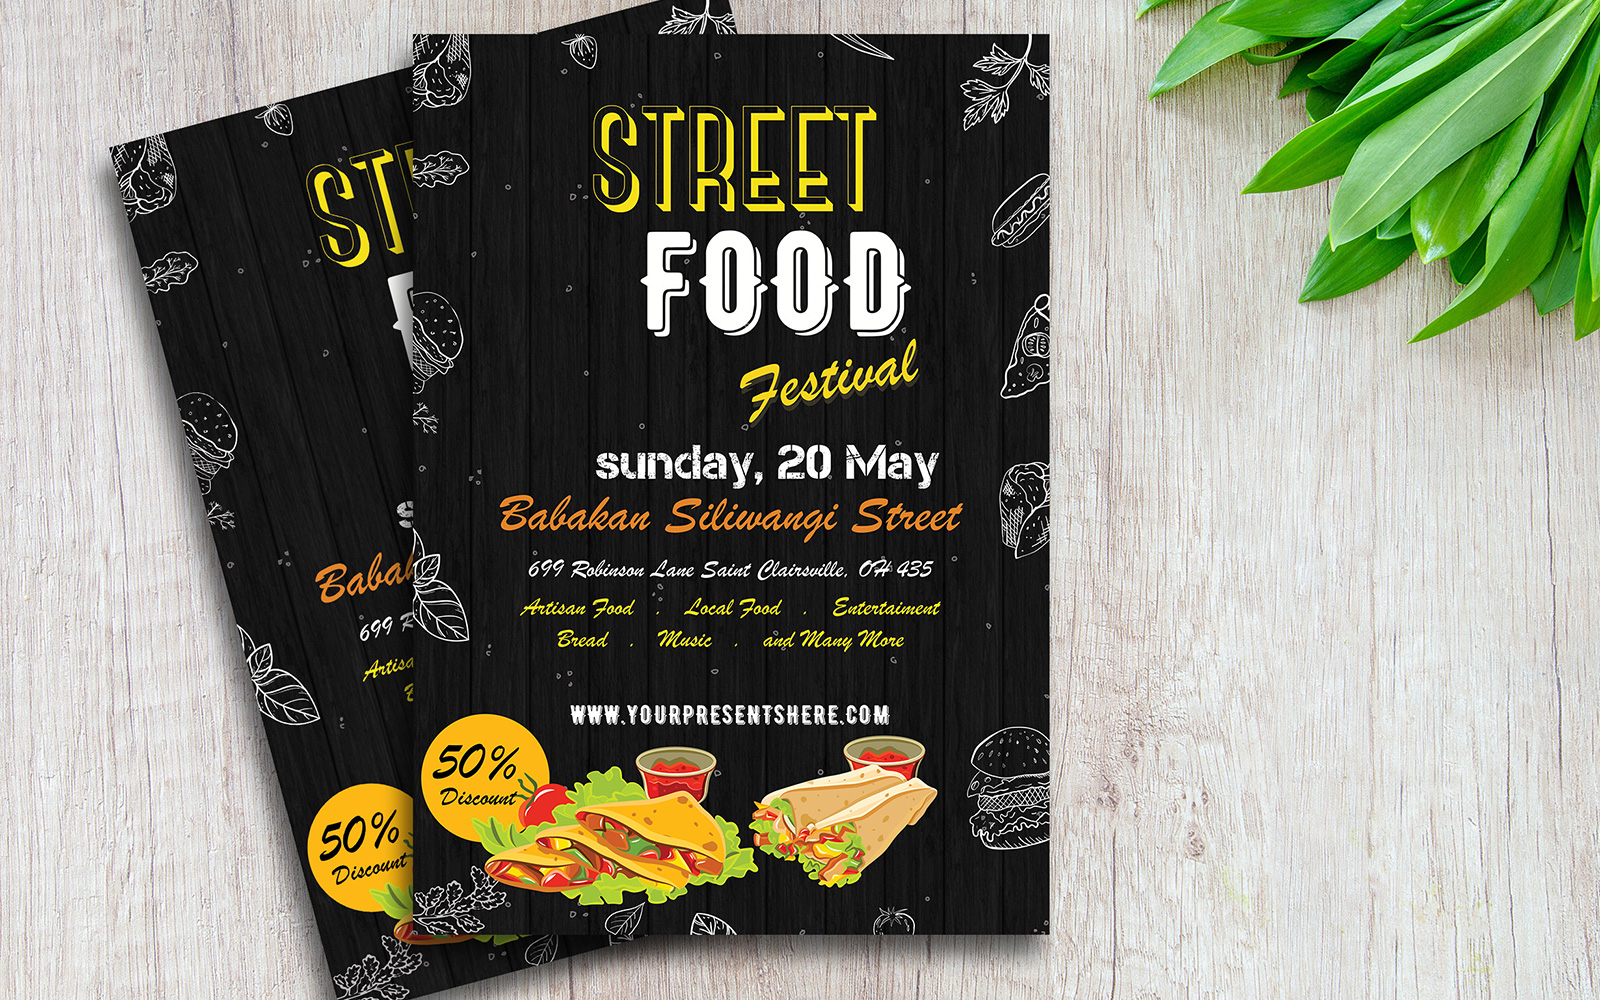 Street Food Festival Flyer Design - Corporate Identity Template